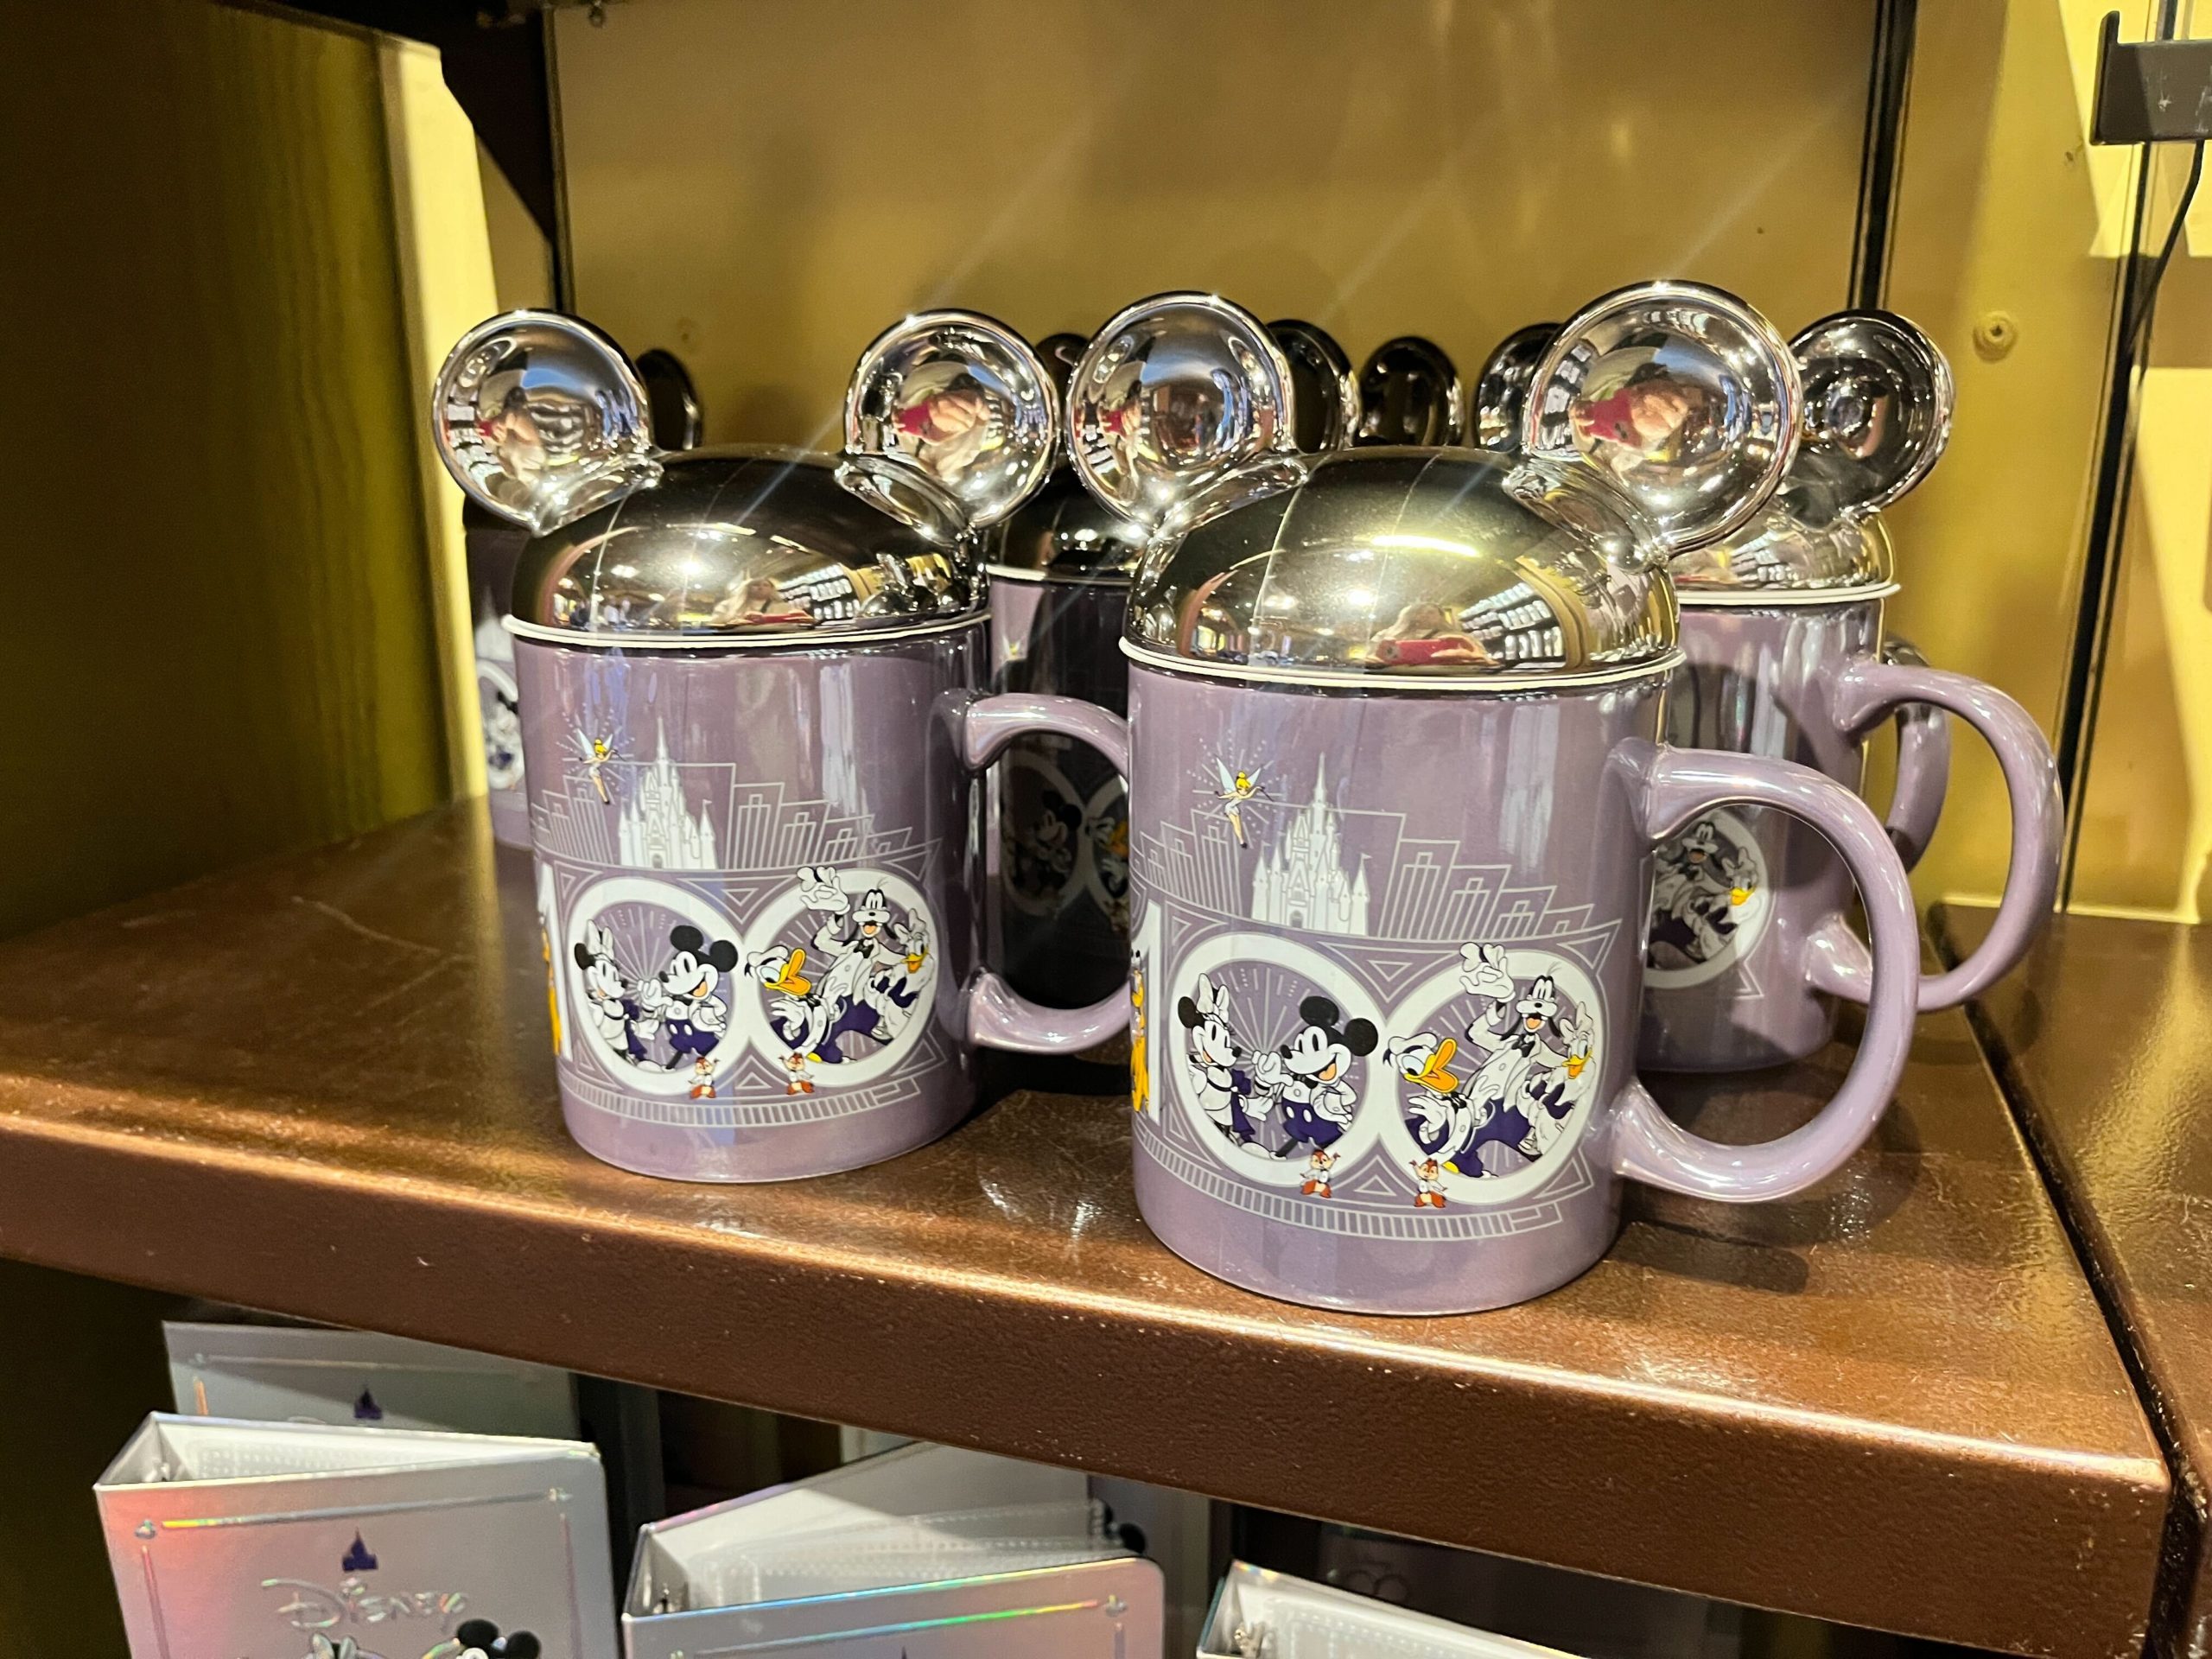 New Disney Cruise Line Merchandise Including Silver Anniversary Mug & Ship  Figure - Disneyland News Today